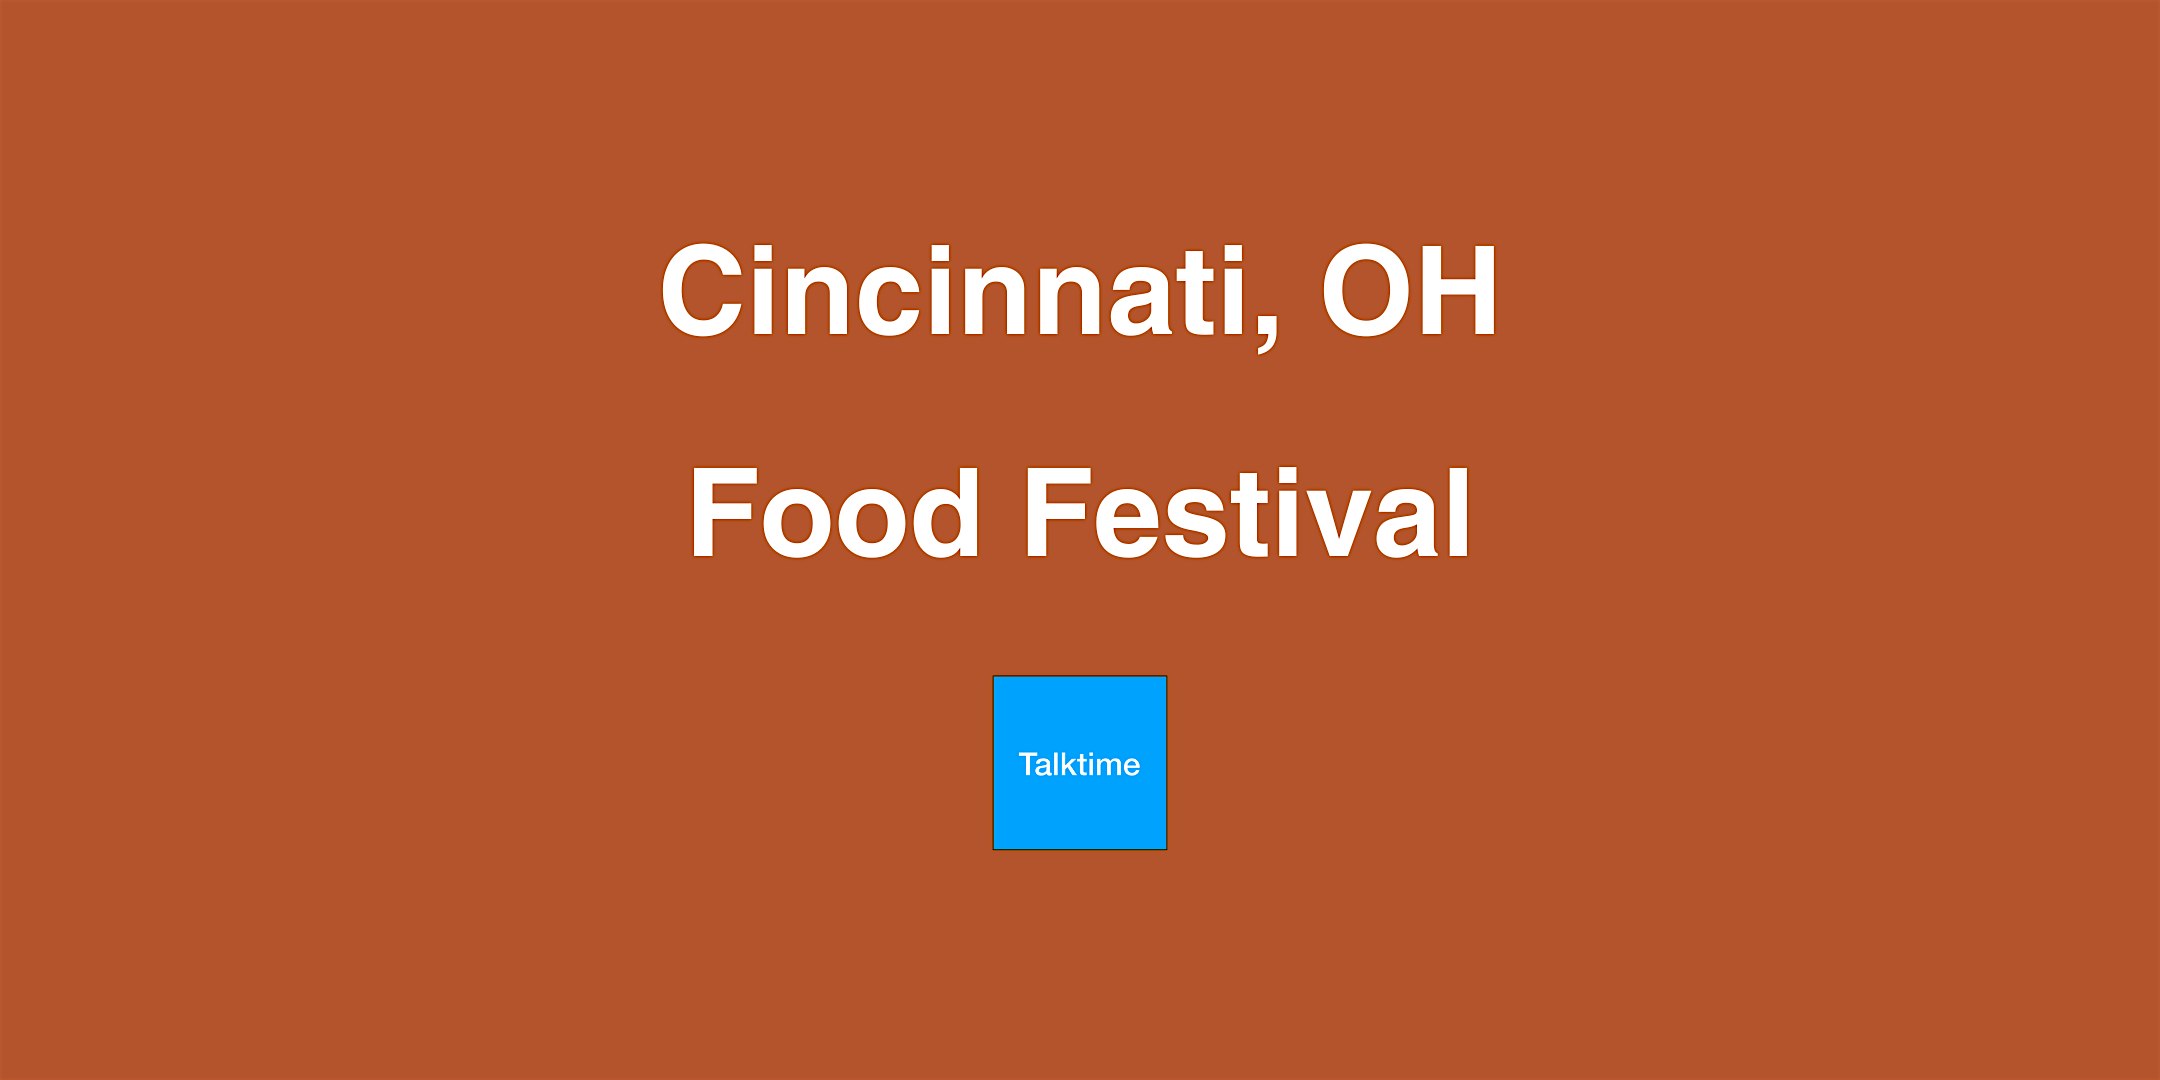 Food Festival - Cincinnati